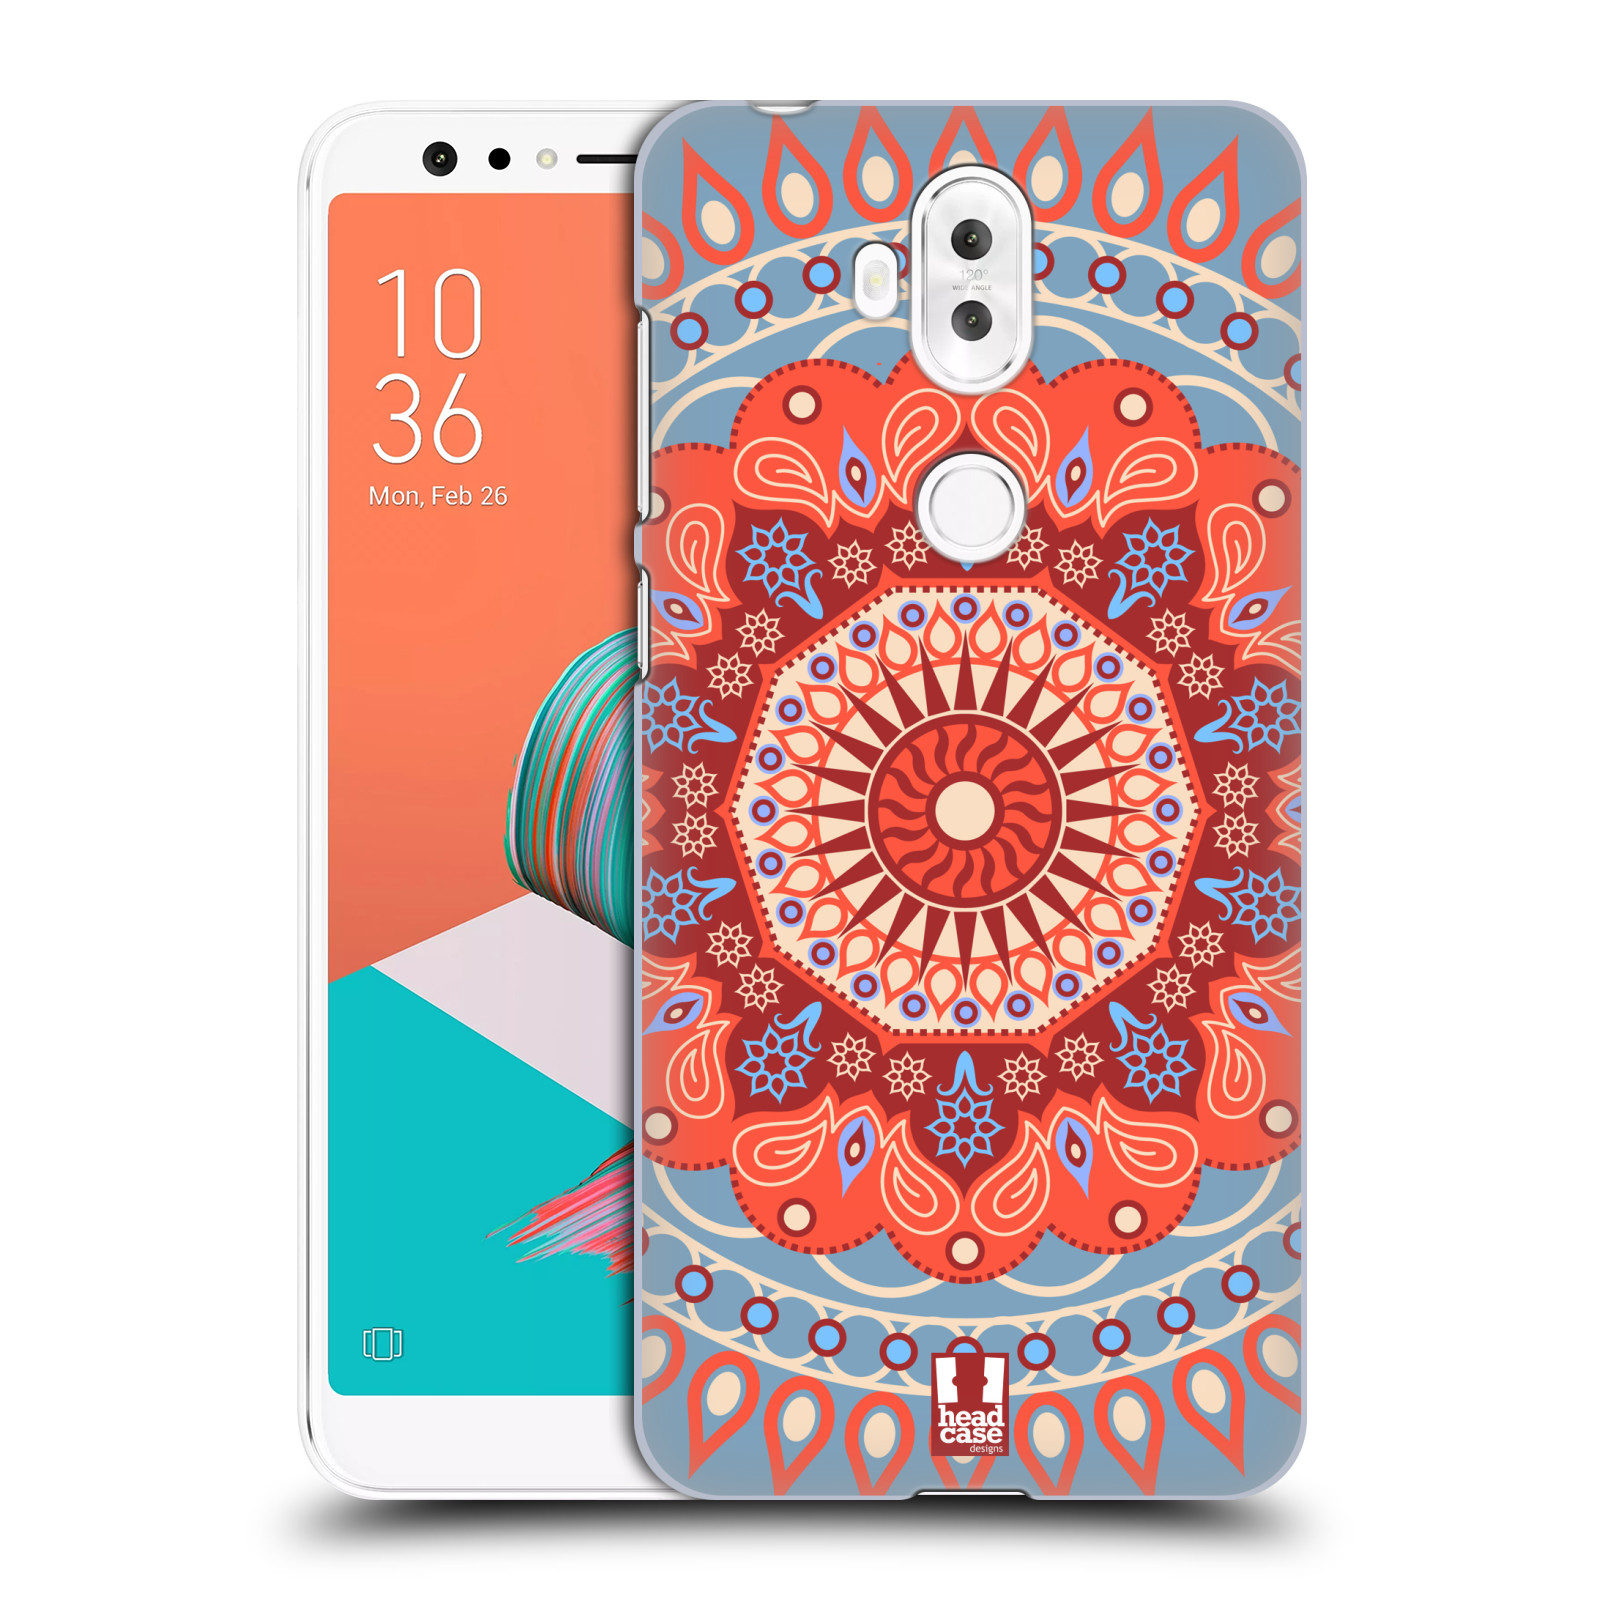 HEAD CASE plastový obal na mobil Asus Zenfone 5 LITE ZC600KL vzor Indie Mandala slunce barevný motiv ČERVENÁ A MODRÁ